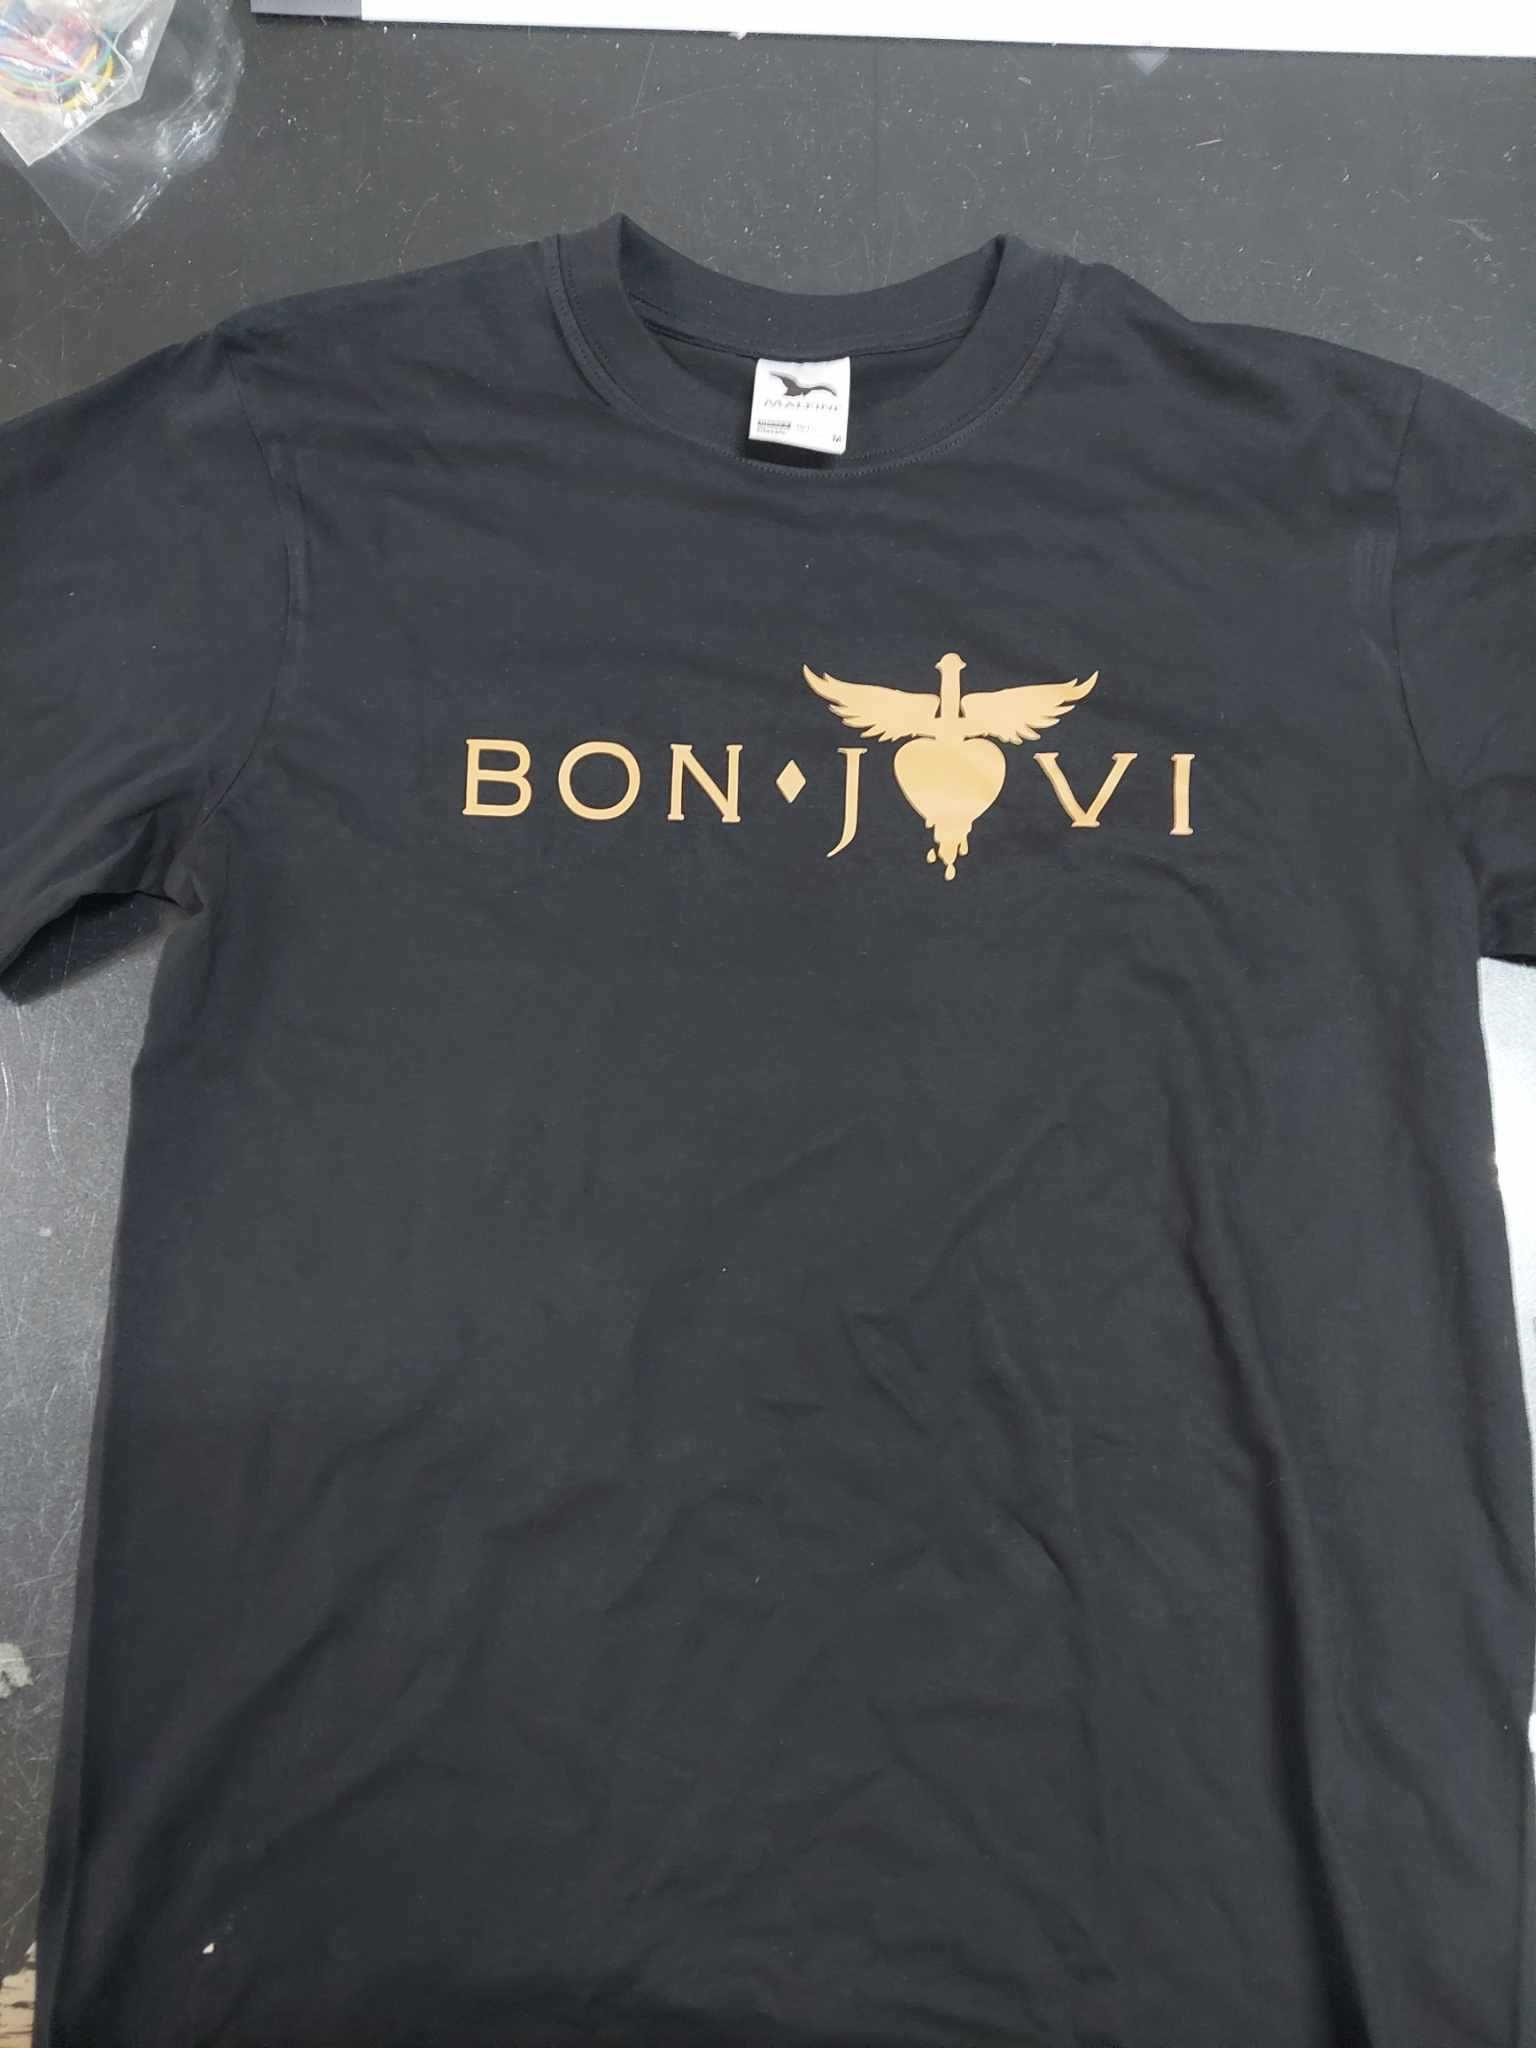 koszulka t-shirt bon jovi nieużywana rozmiar M